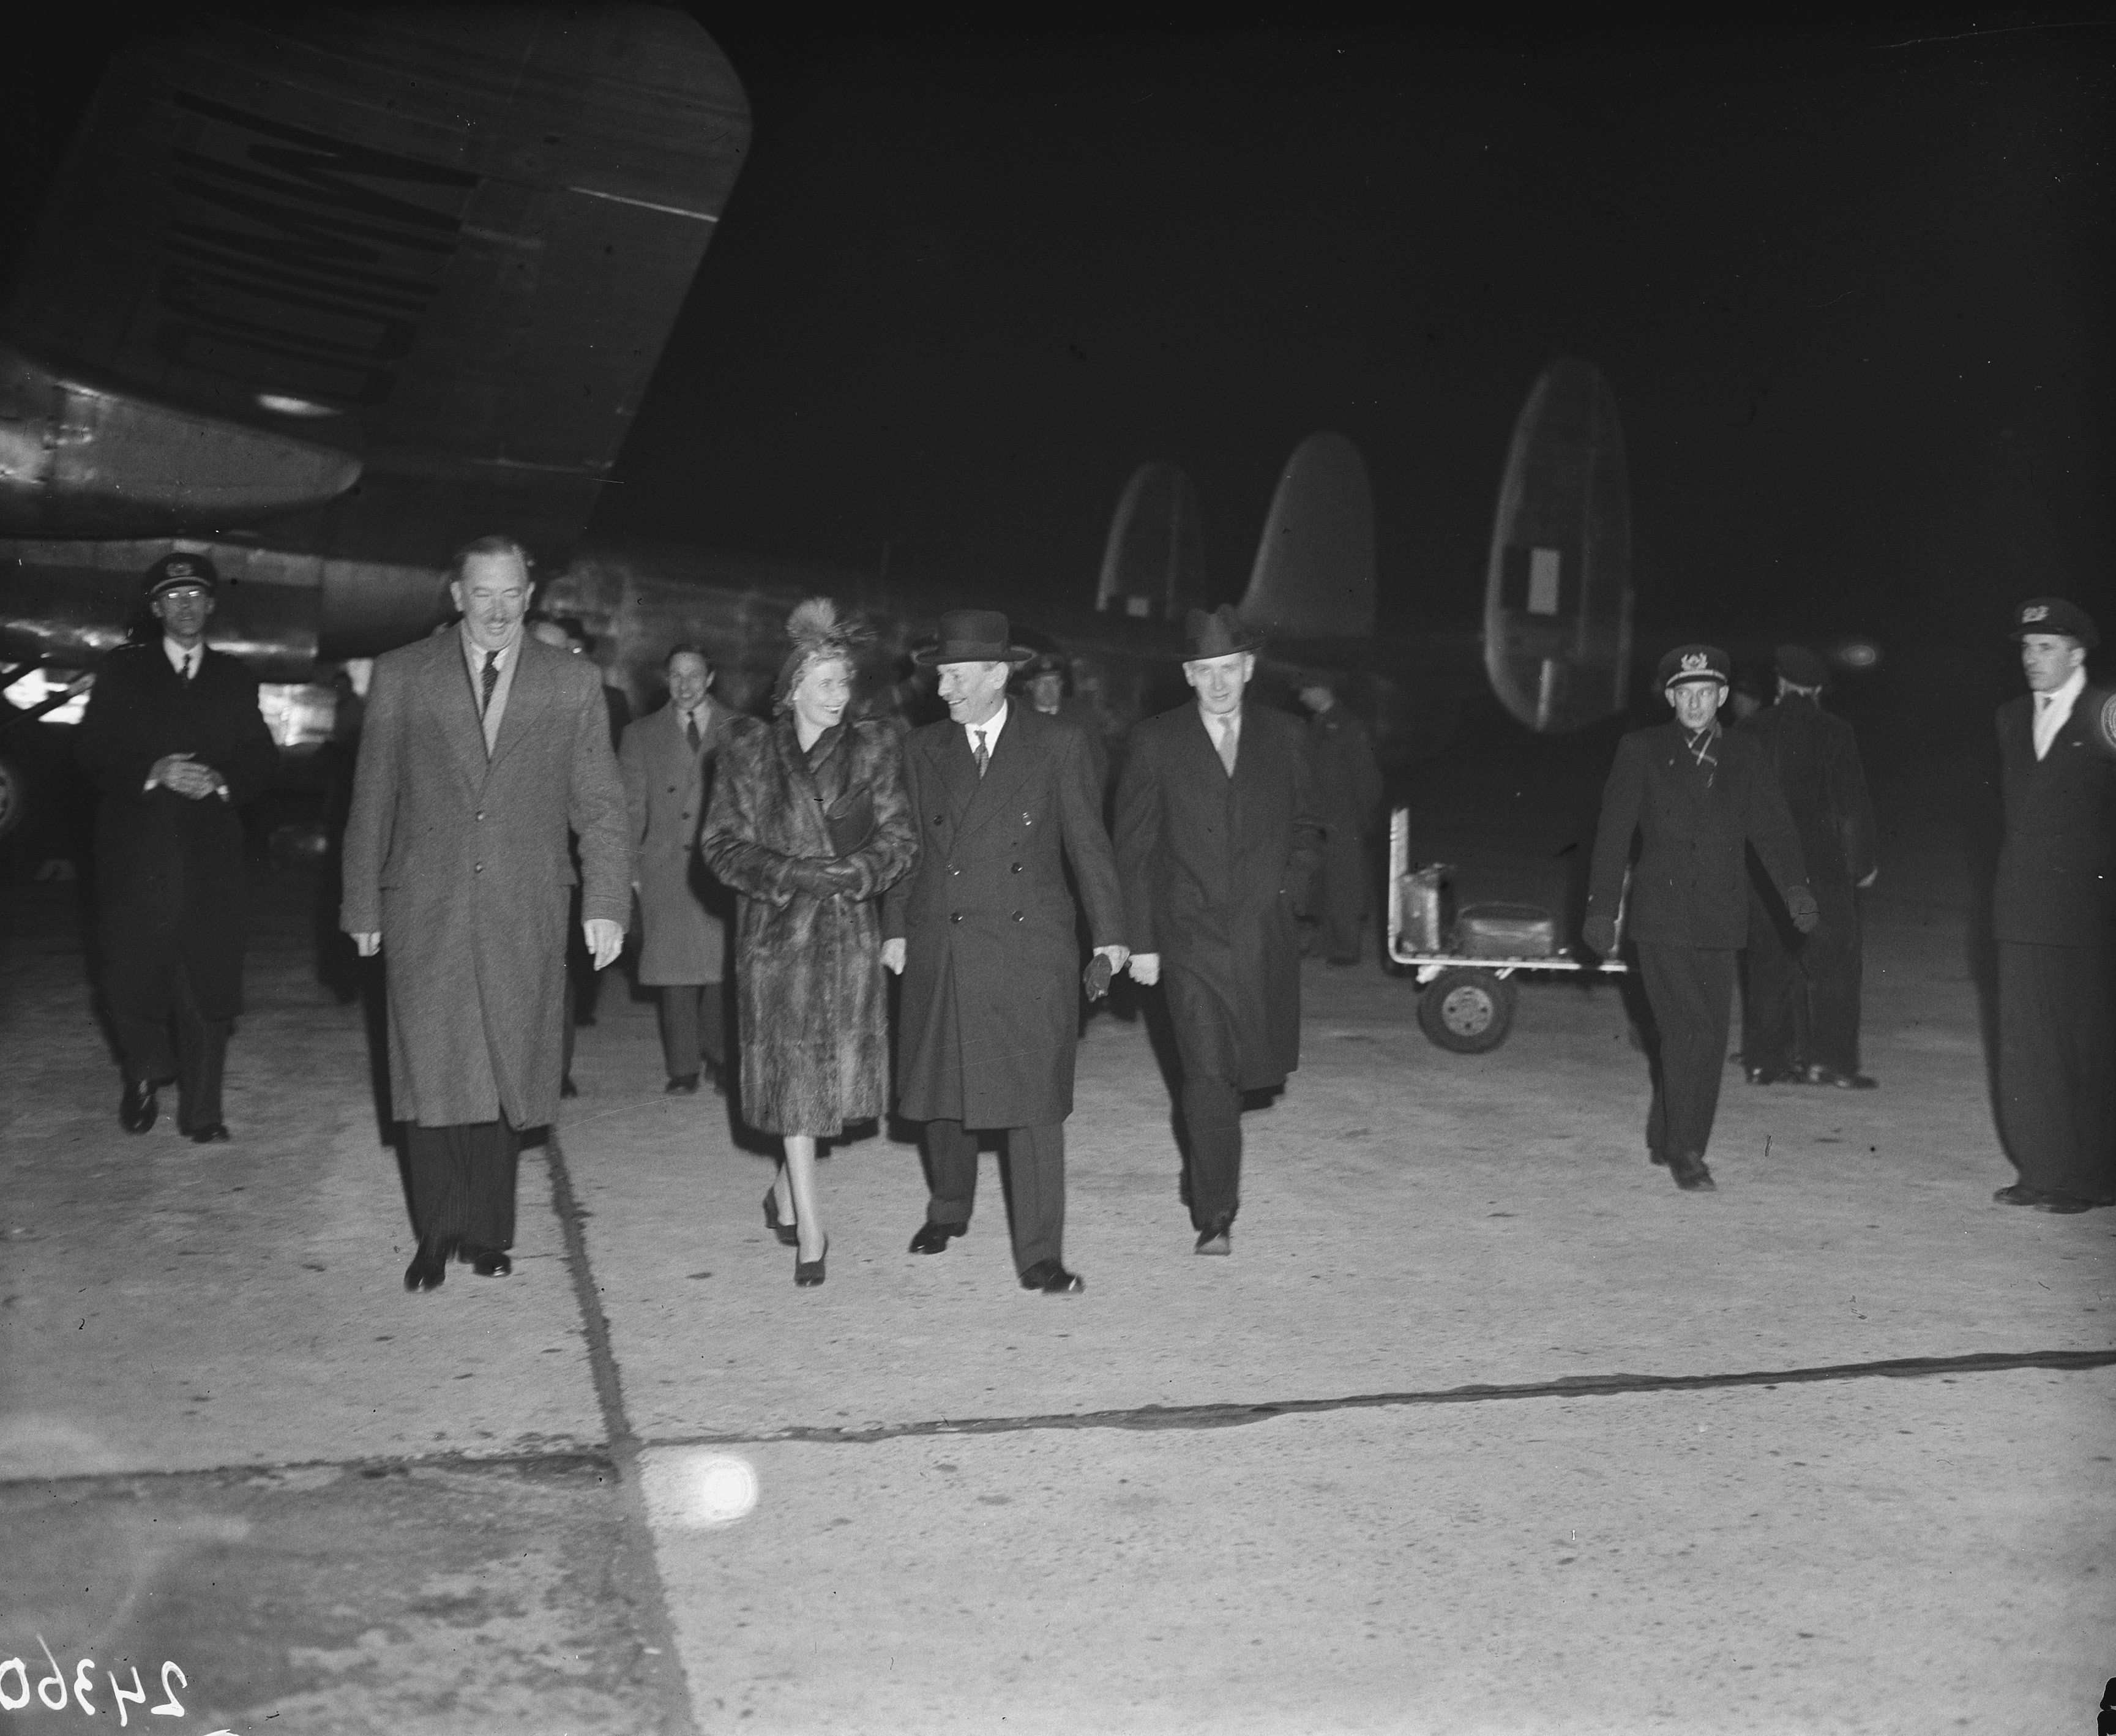 Clement Attlee, Violet Attlee, and others at Schiphol airport, Haarlemmermeer, Noord-Holland, the Netherlands, 3 Nov 1947